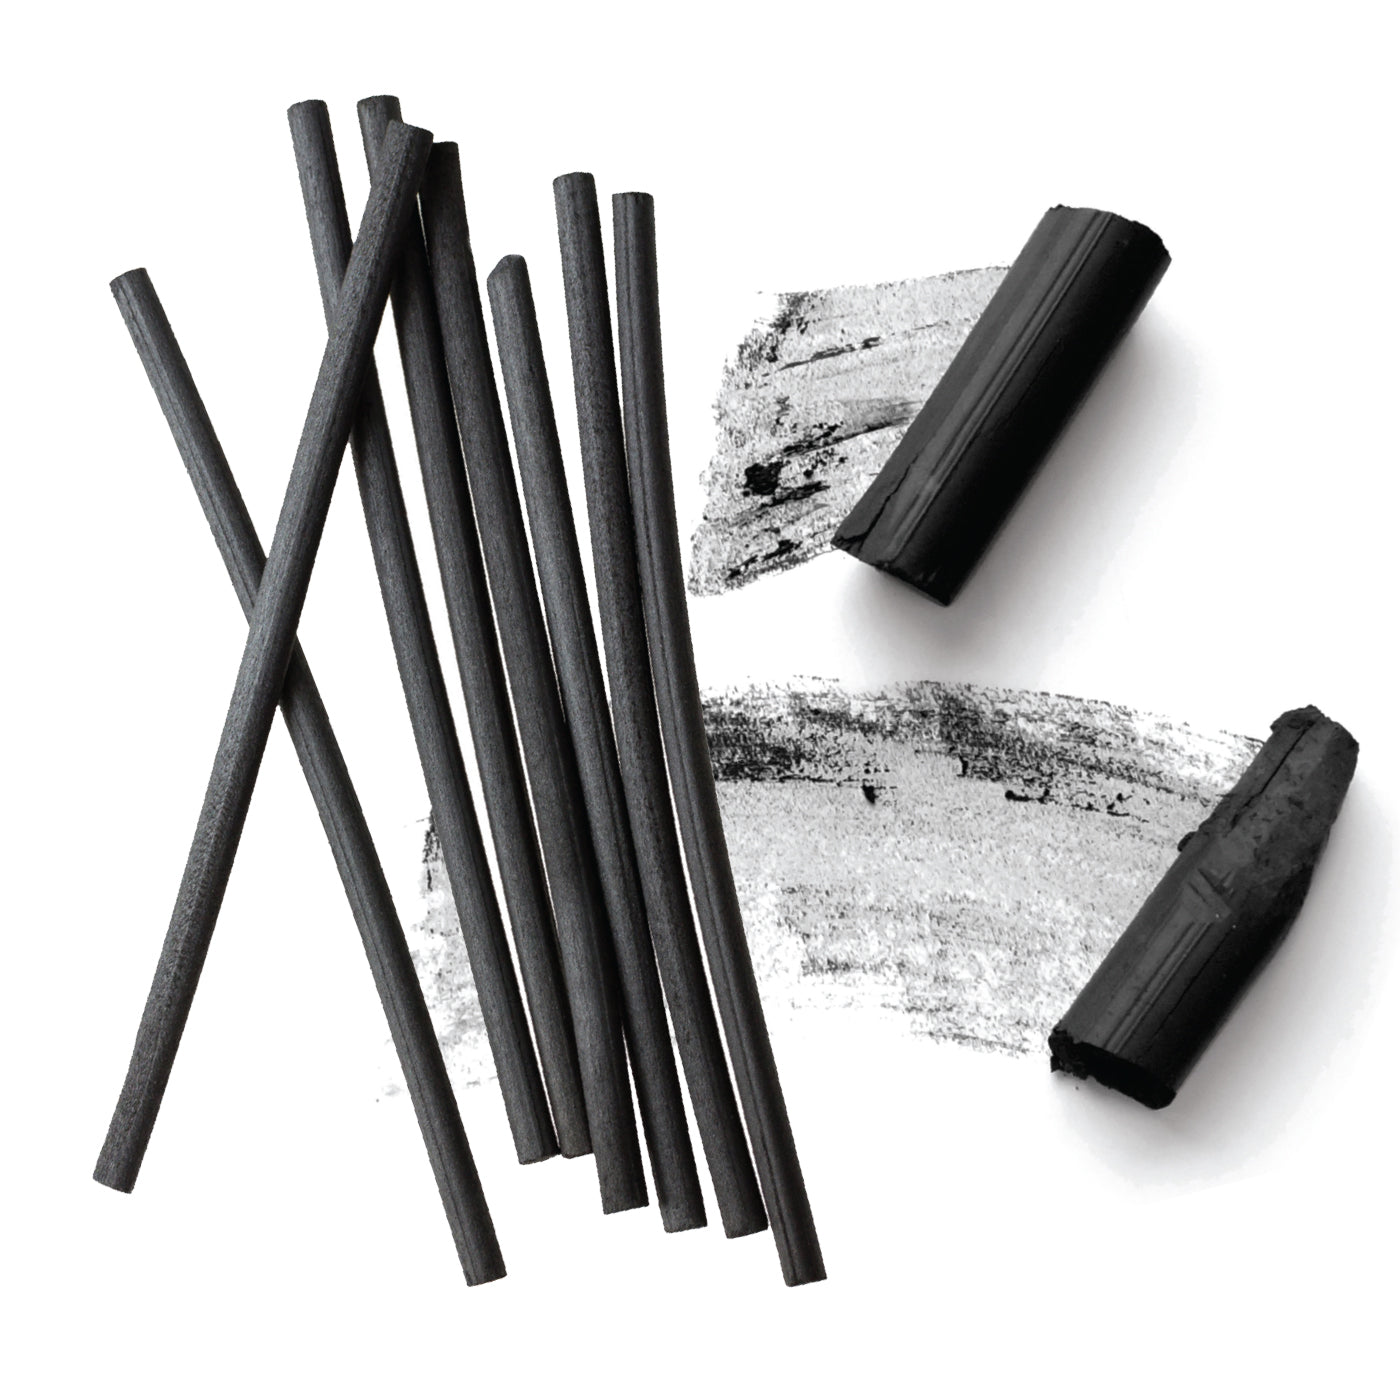 Charcoal; blocks, sticks and pencils – ScrawlrBox